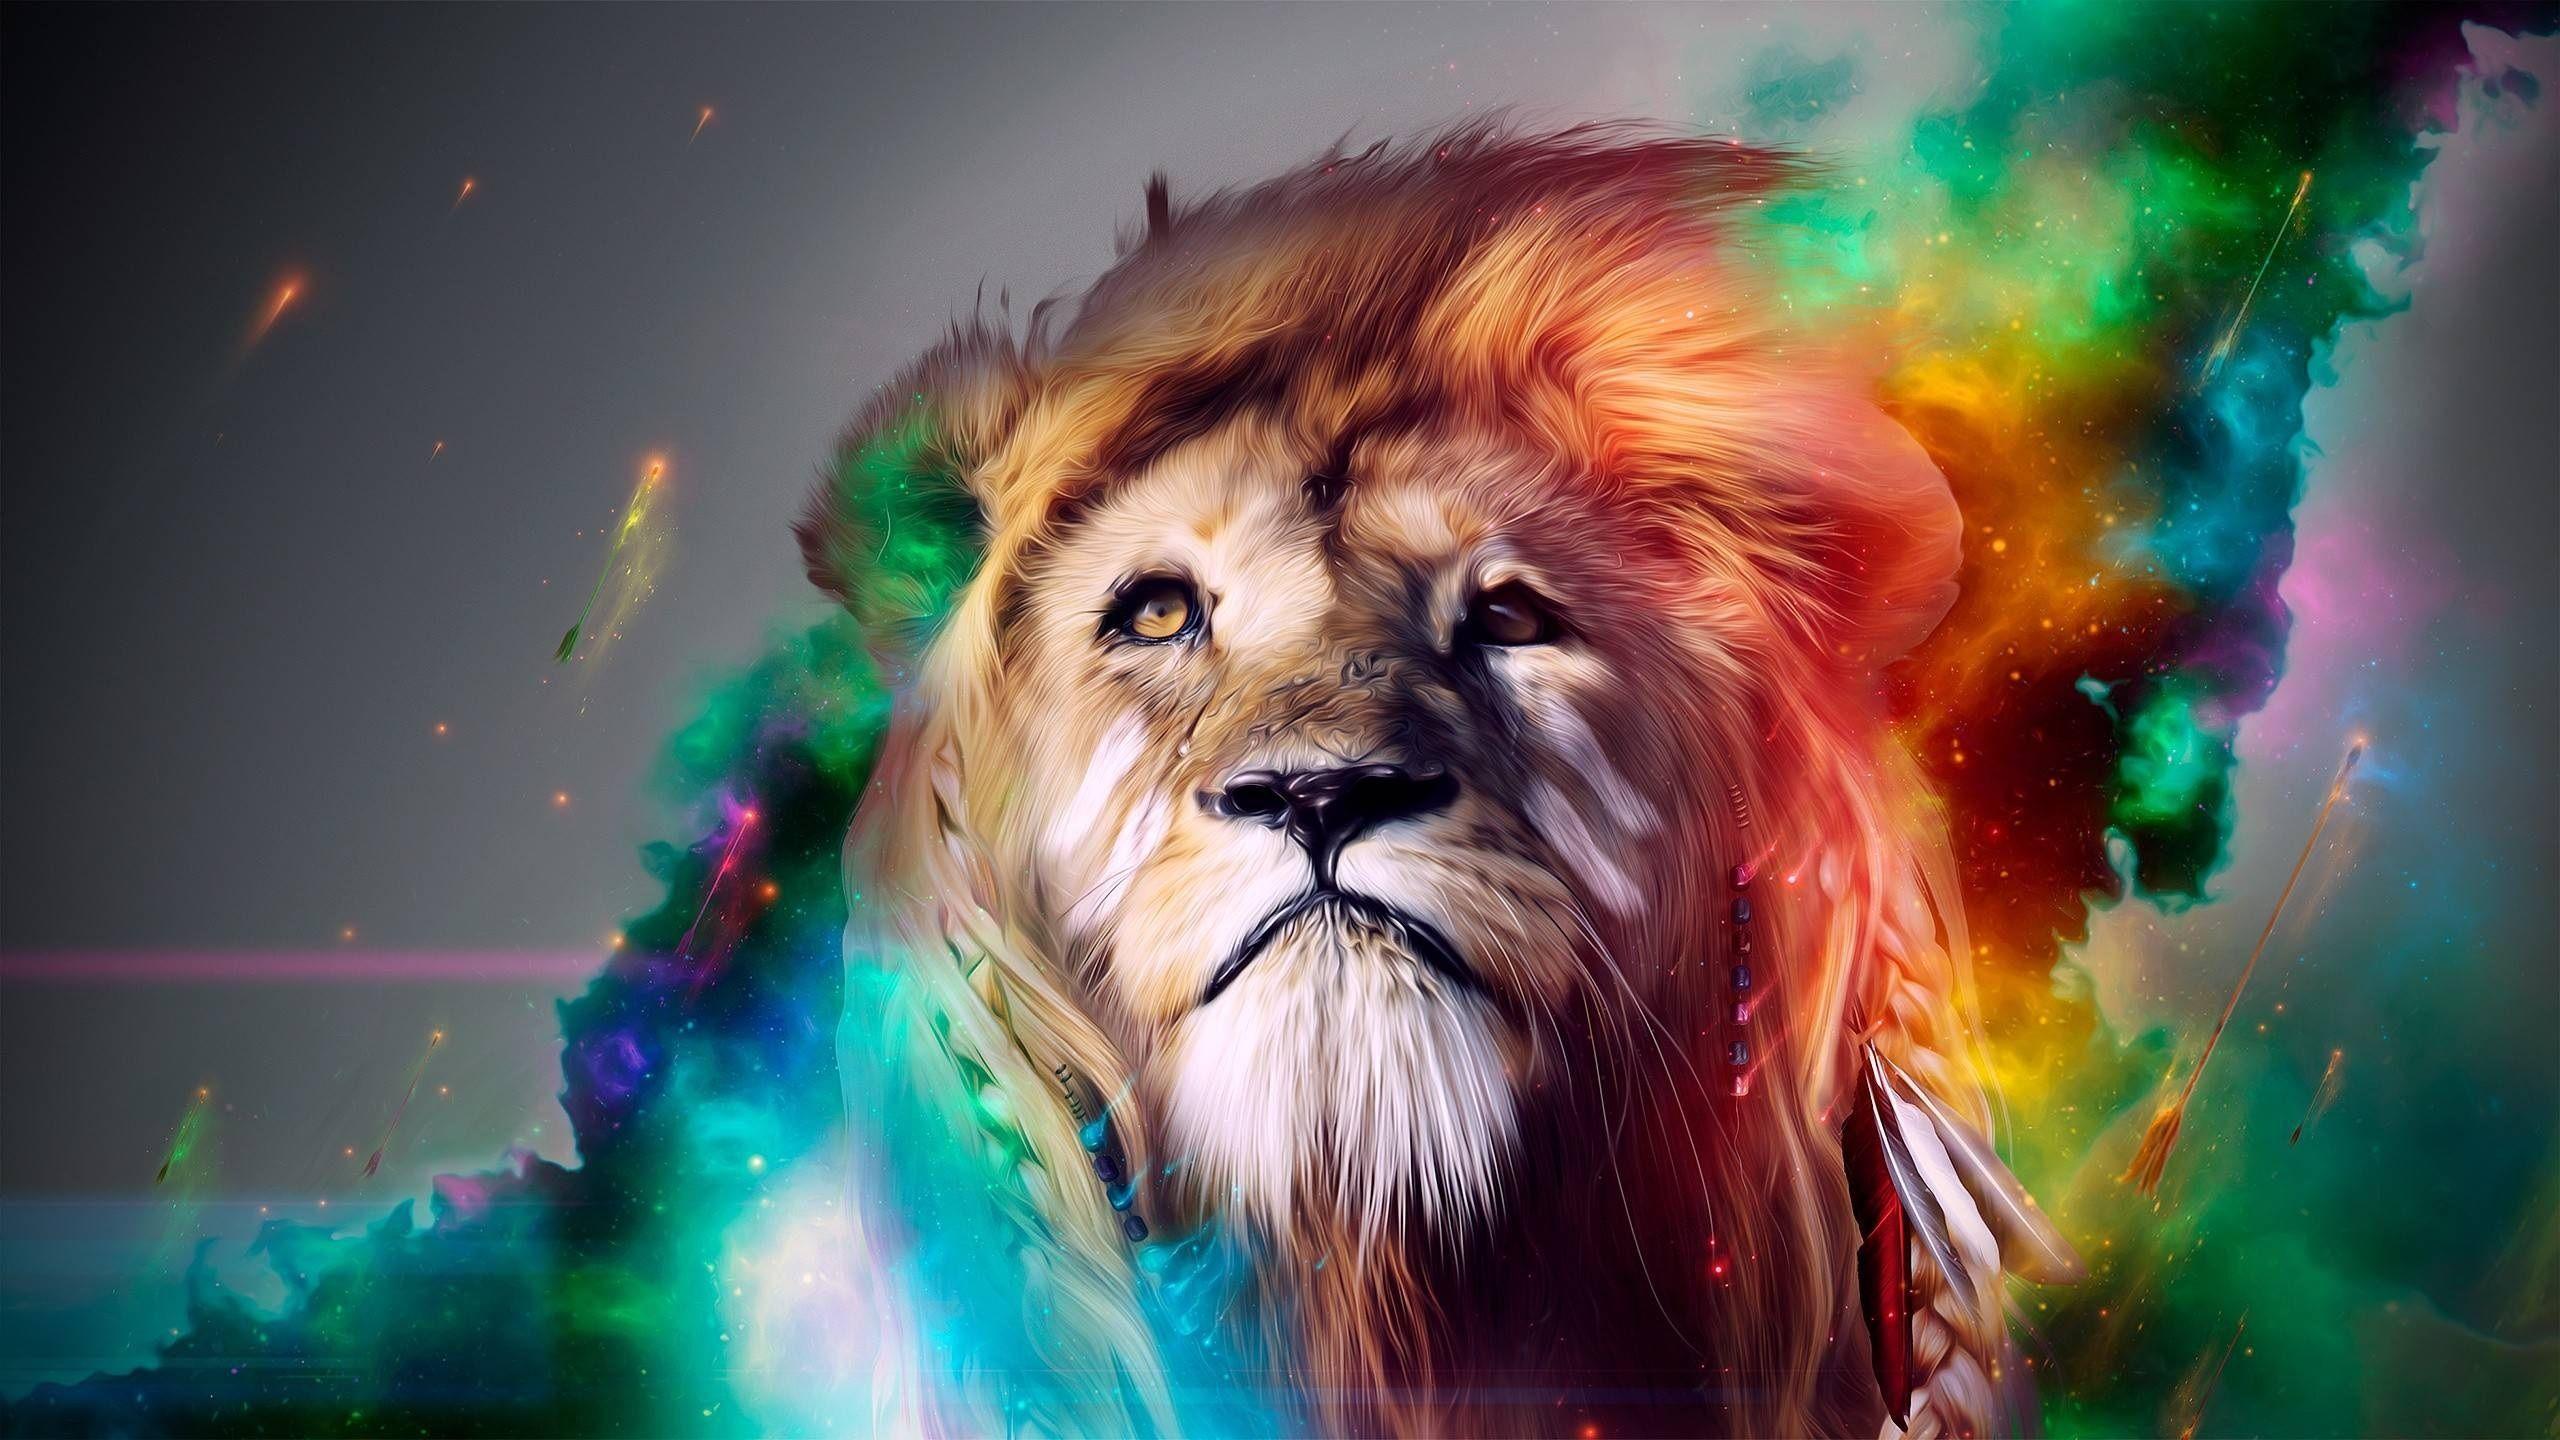 Trippy Colorful Lion